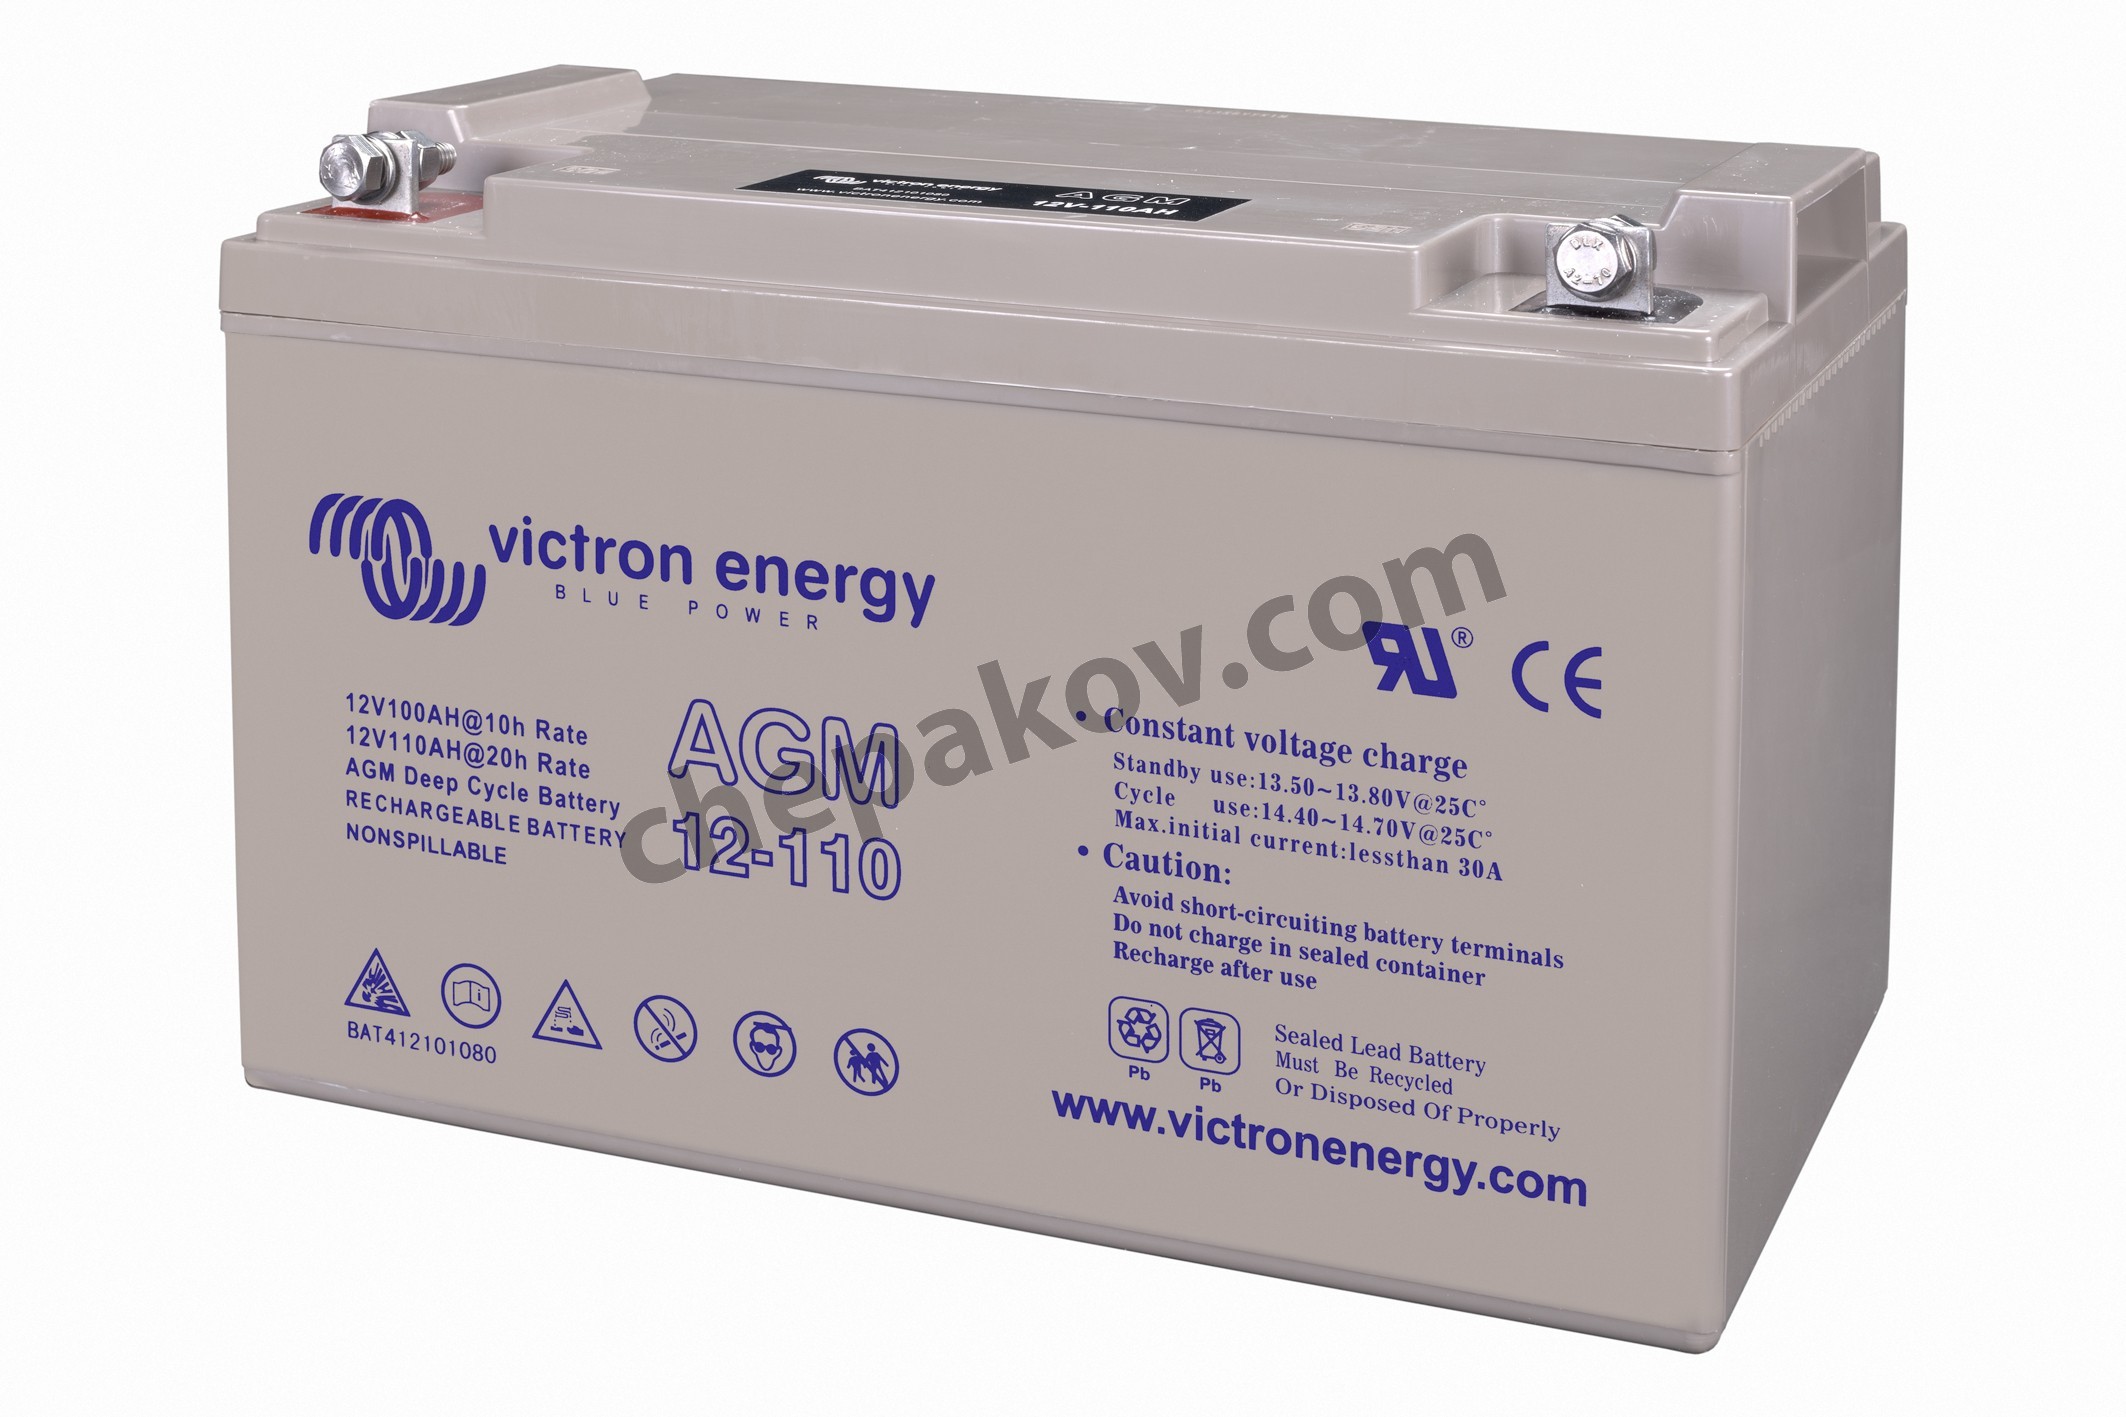 Batería Victron Energy AGM Super Cycle 12V 100Ah